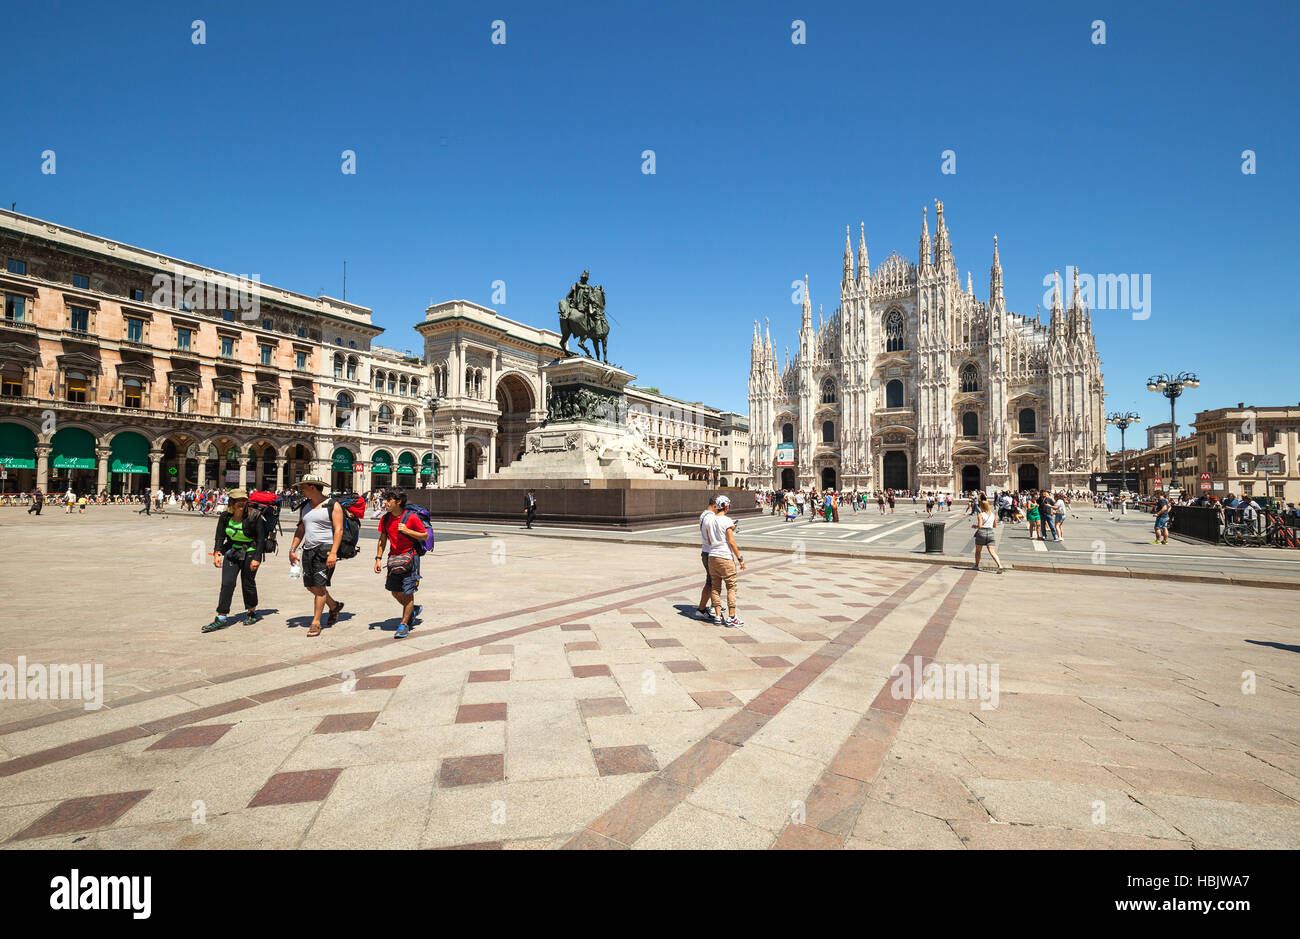 The tourist centre of Milan Stock Photo